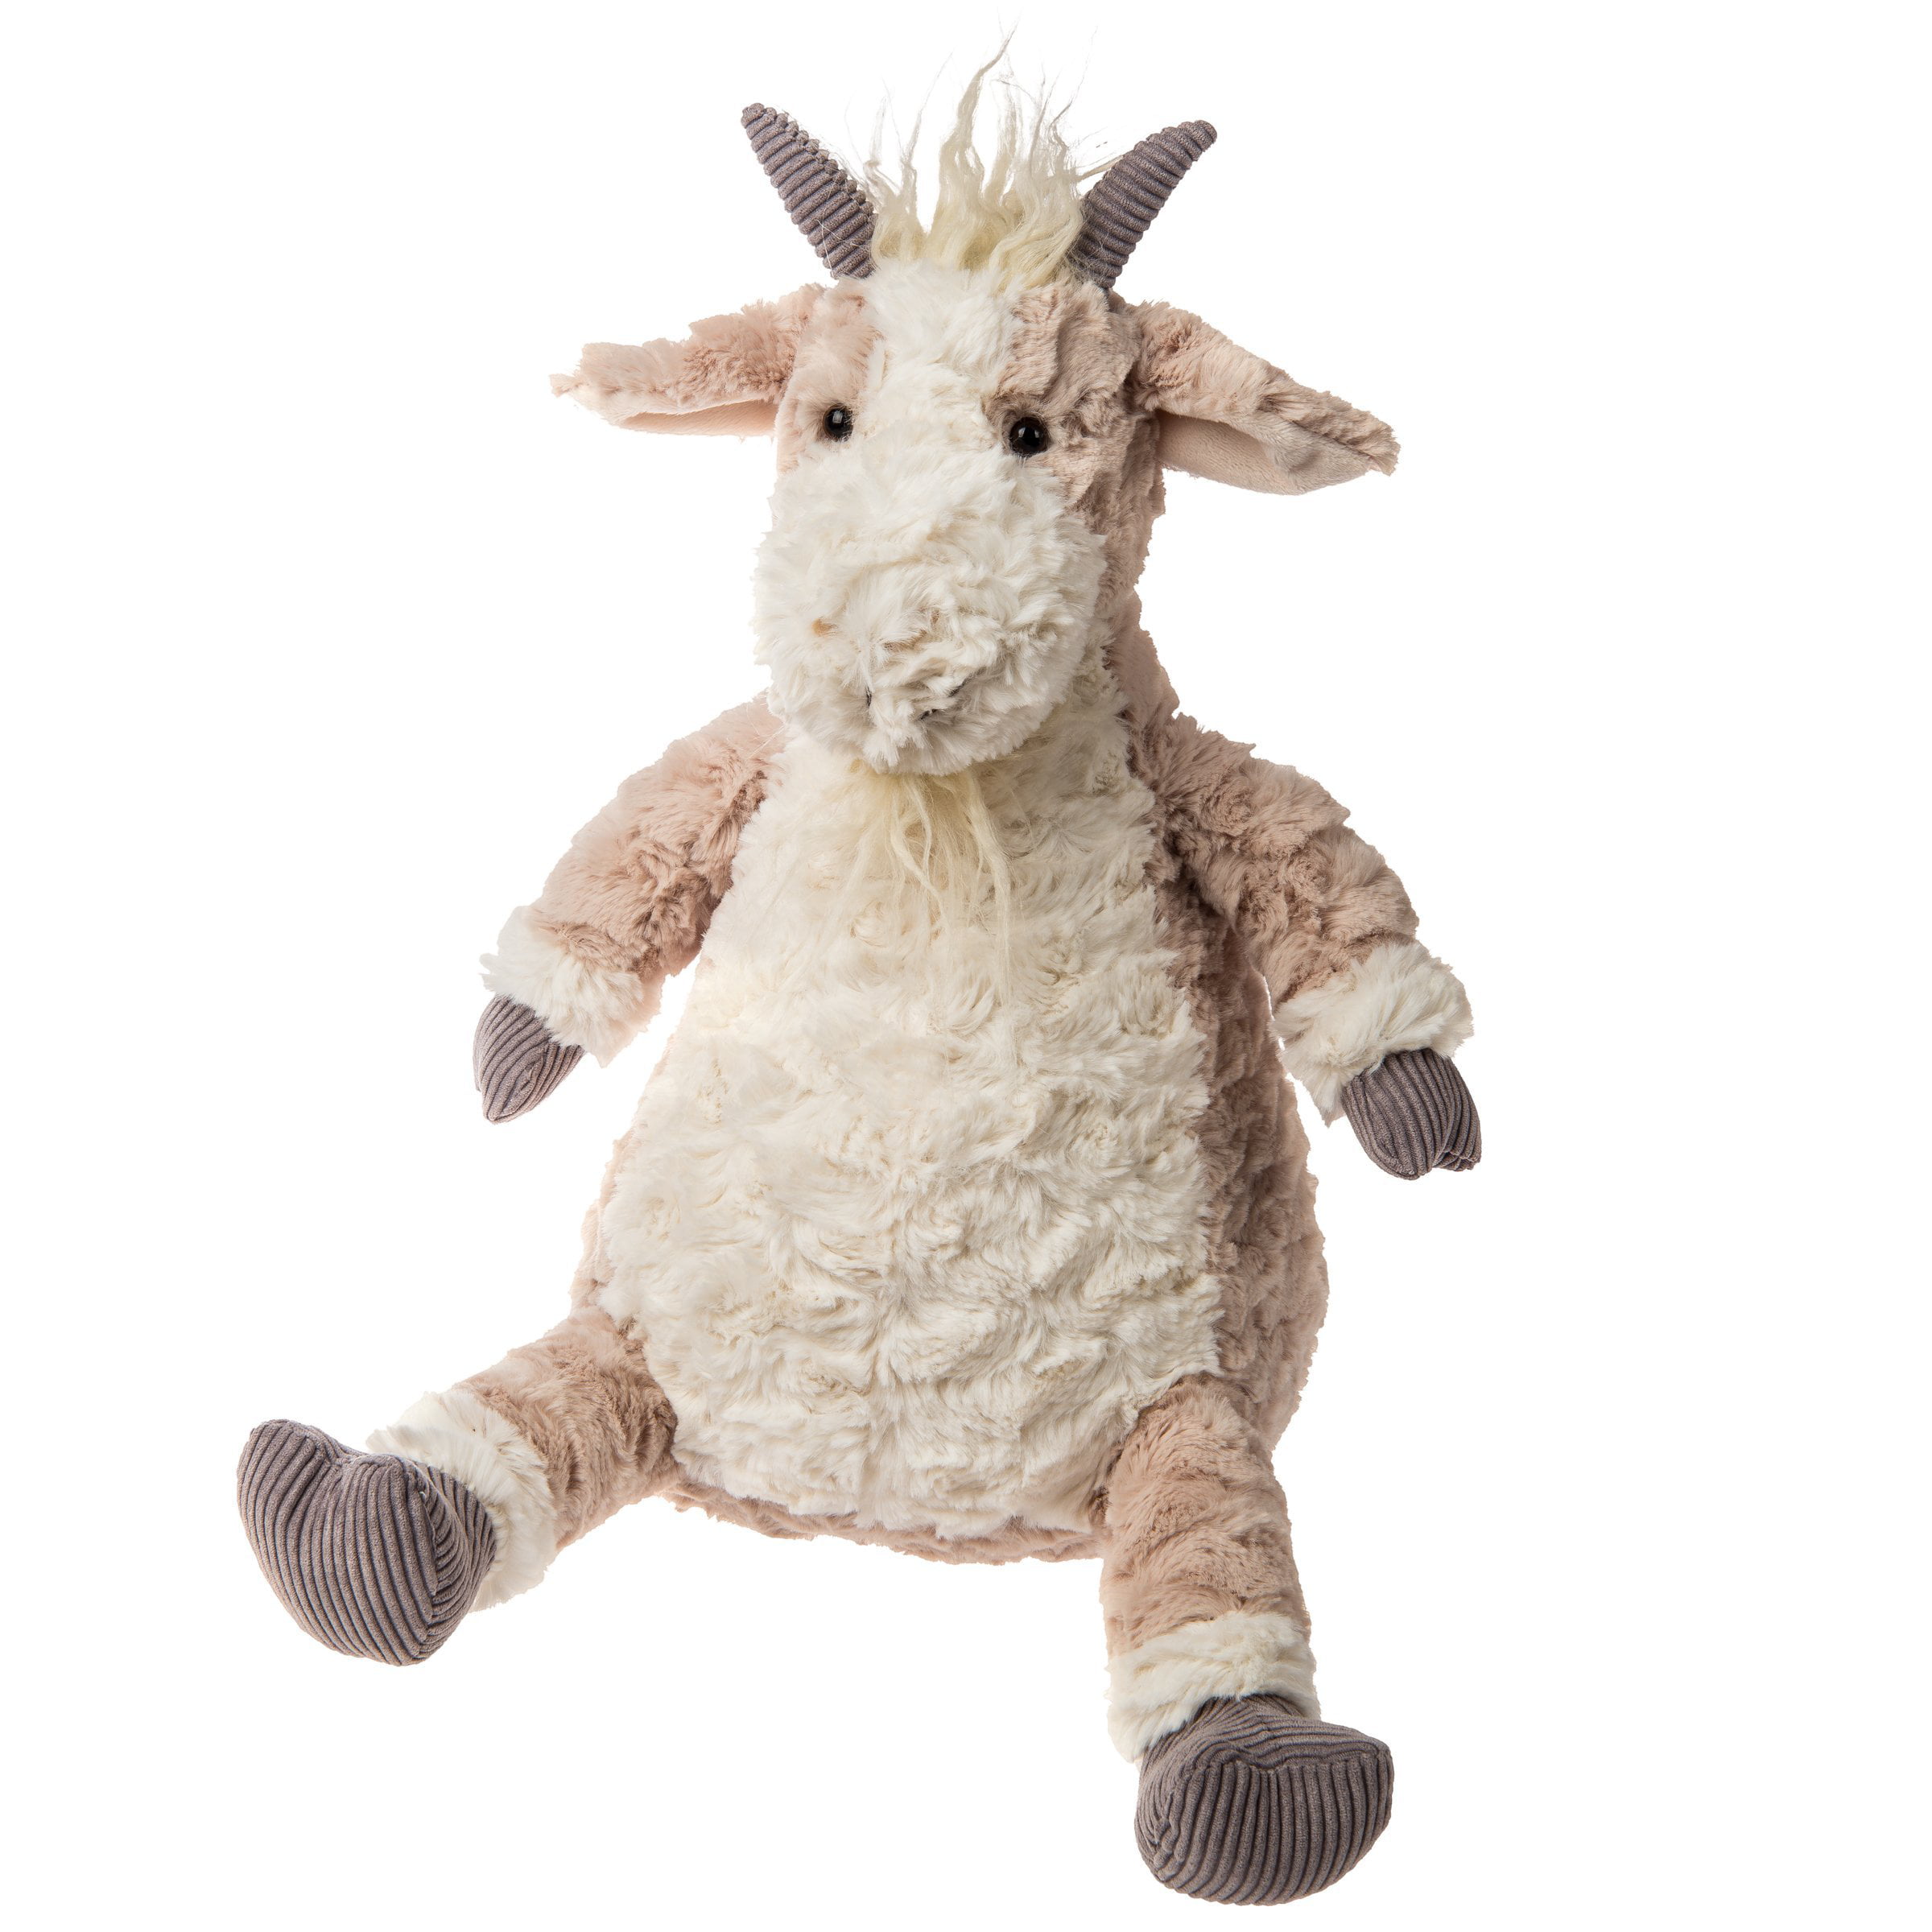 stuffed goat toy walmart